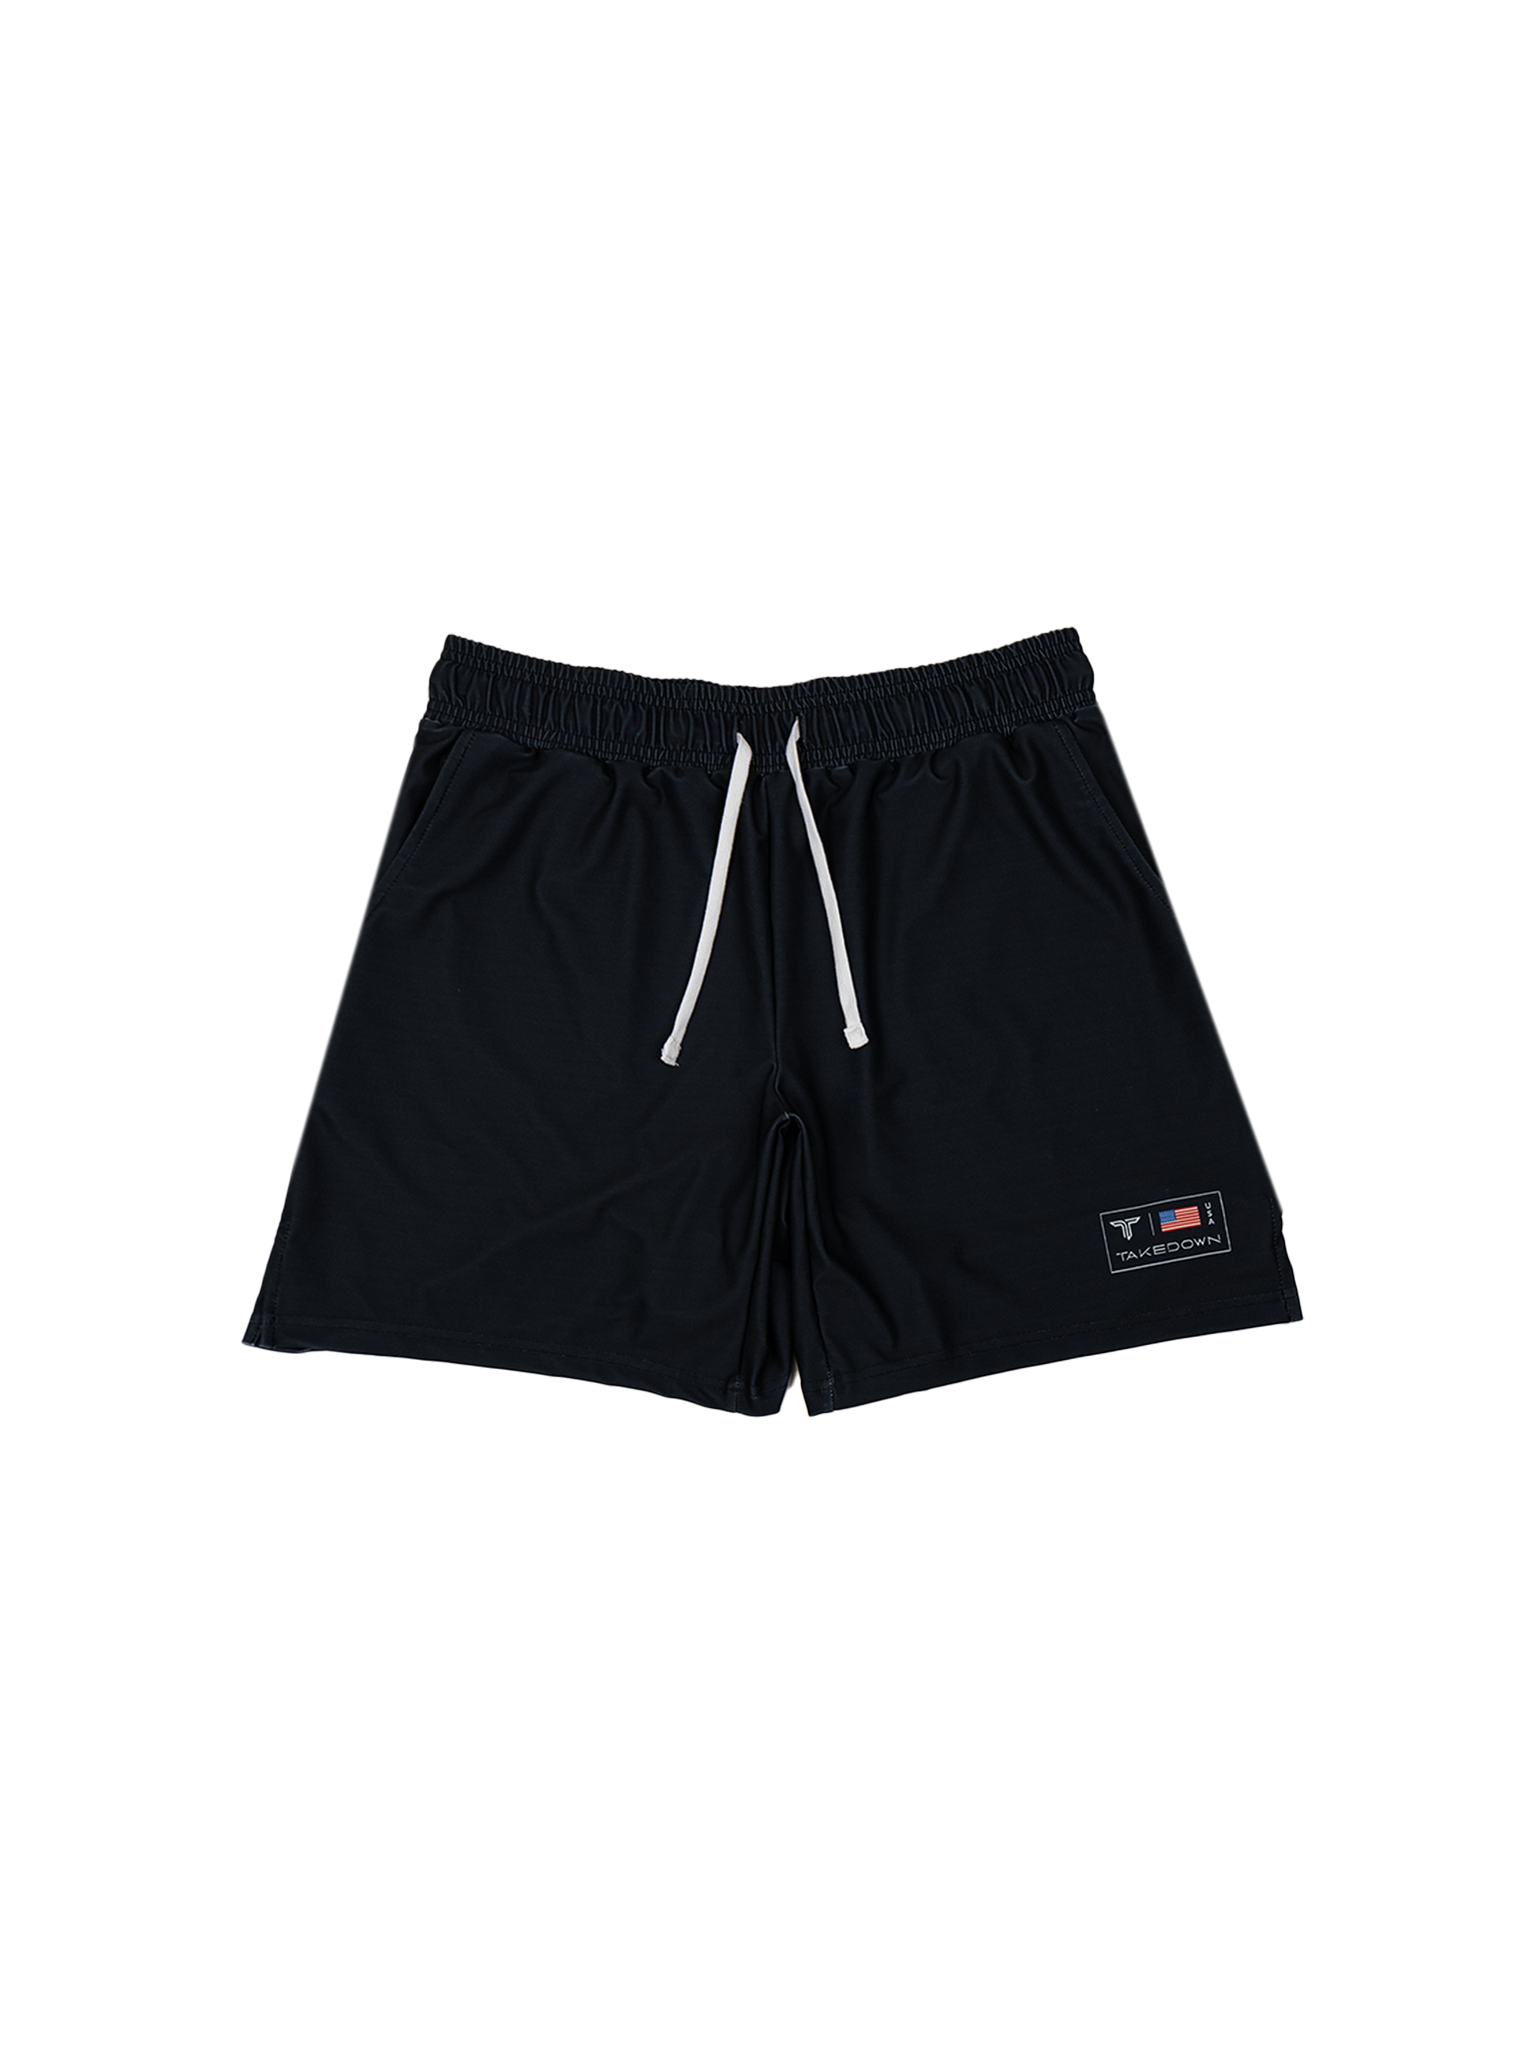 Raven Black Core Gym Shorts (5"&7" Inseam)